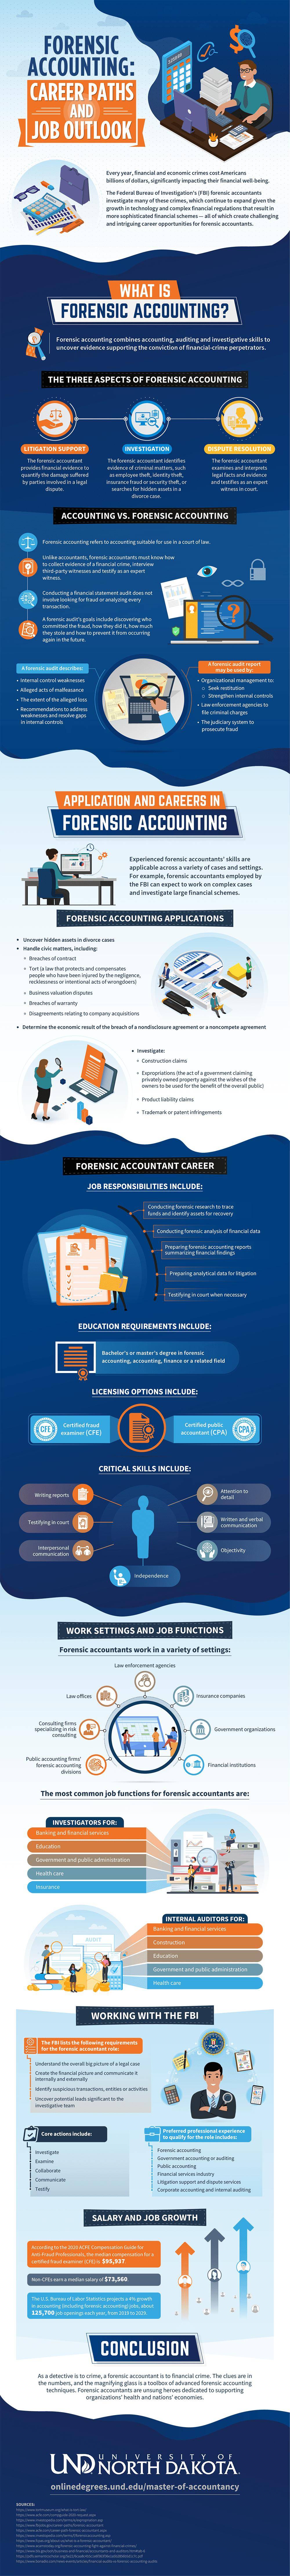 alternative careers for accountants